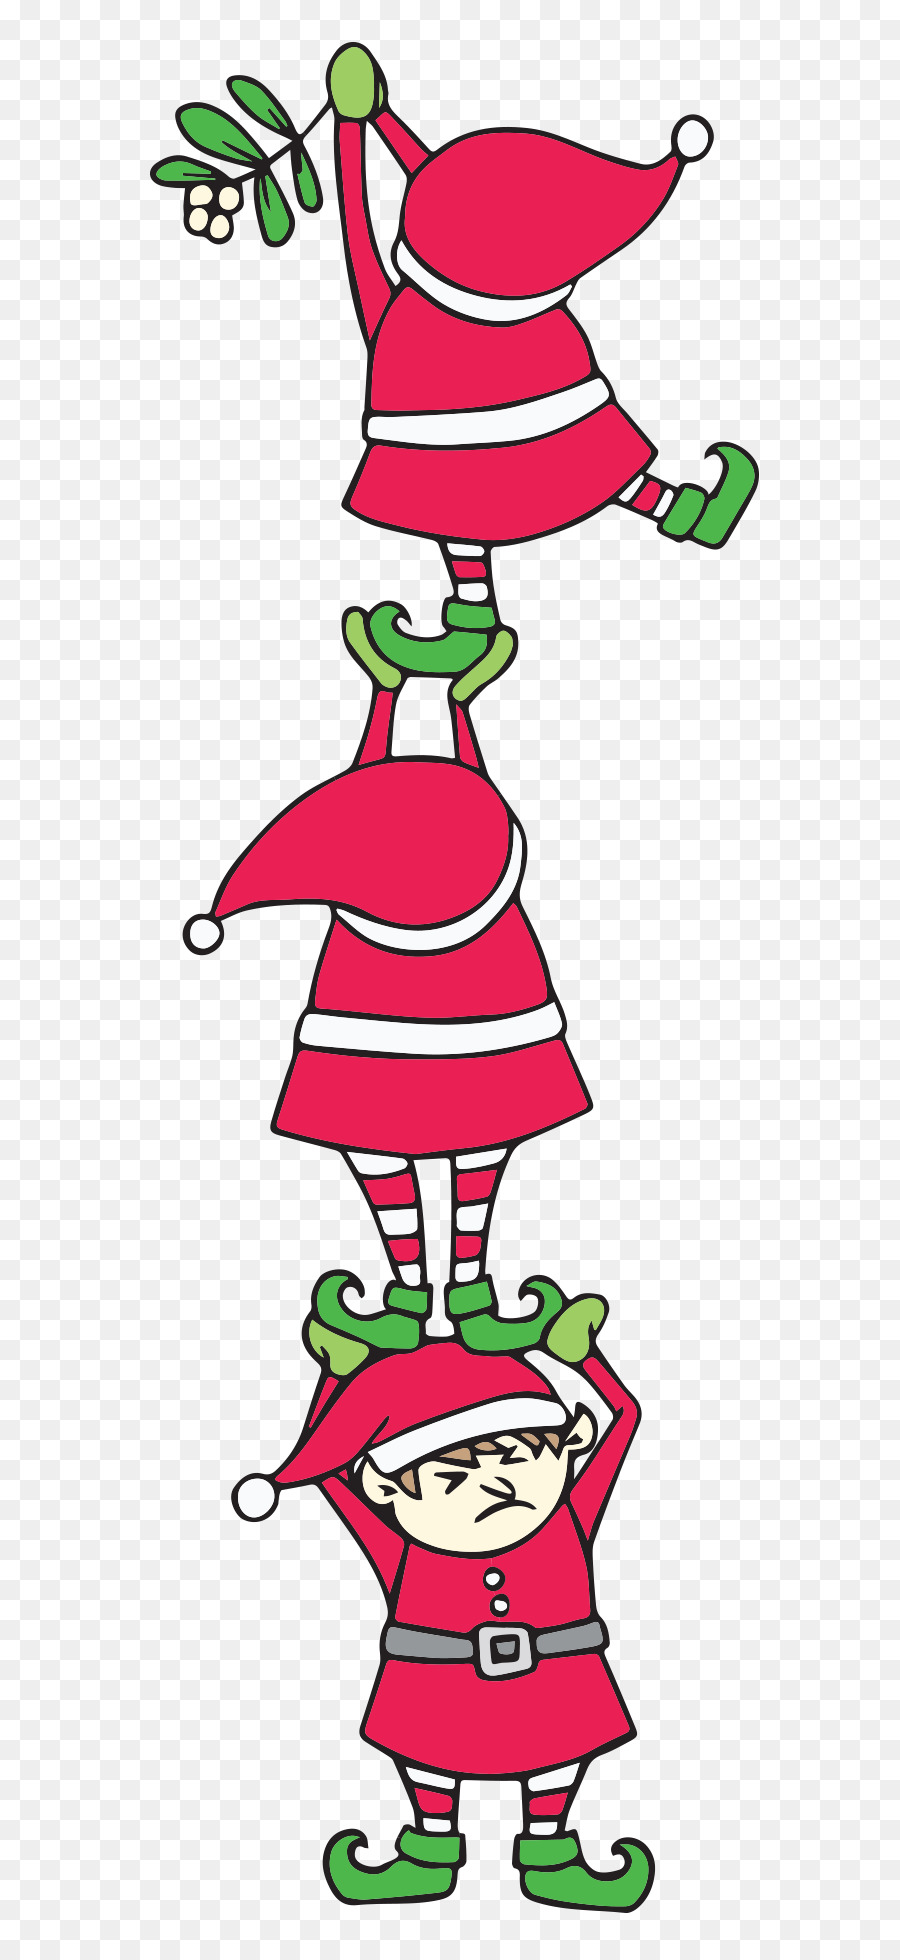 Santa Claus North Pole Christmas elf Clip-art - Weihnachtself